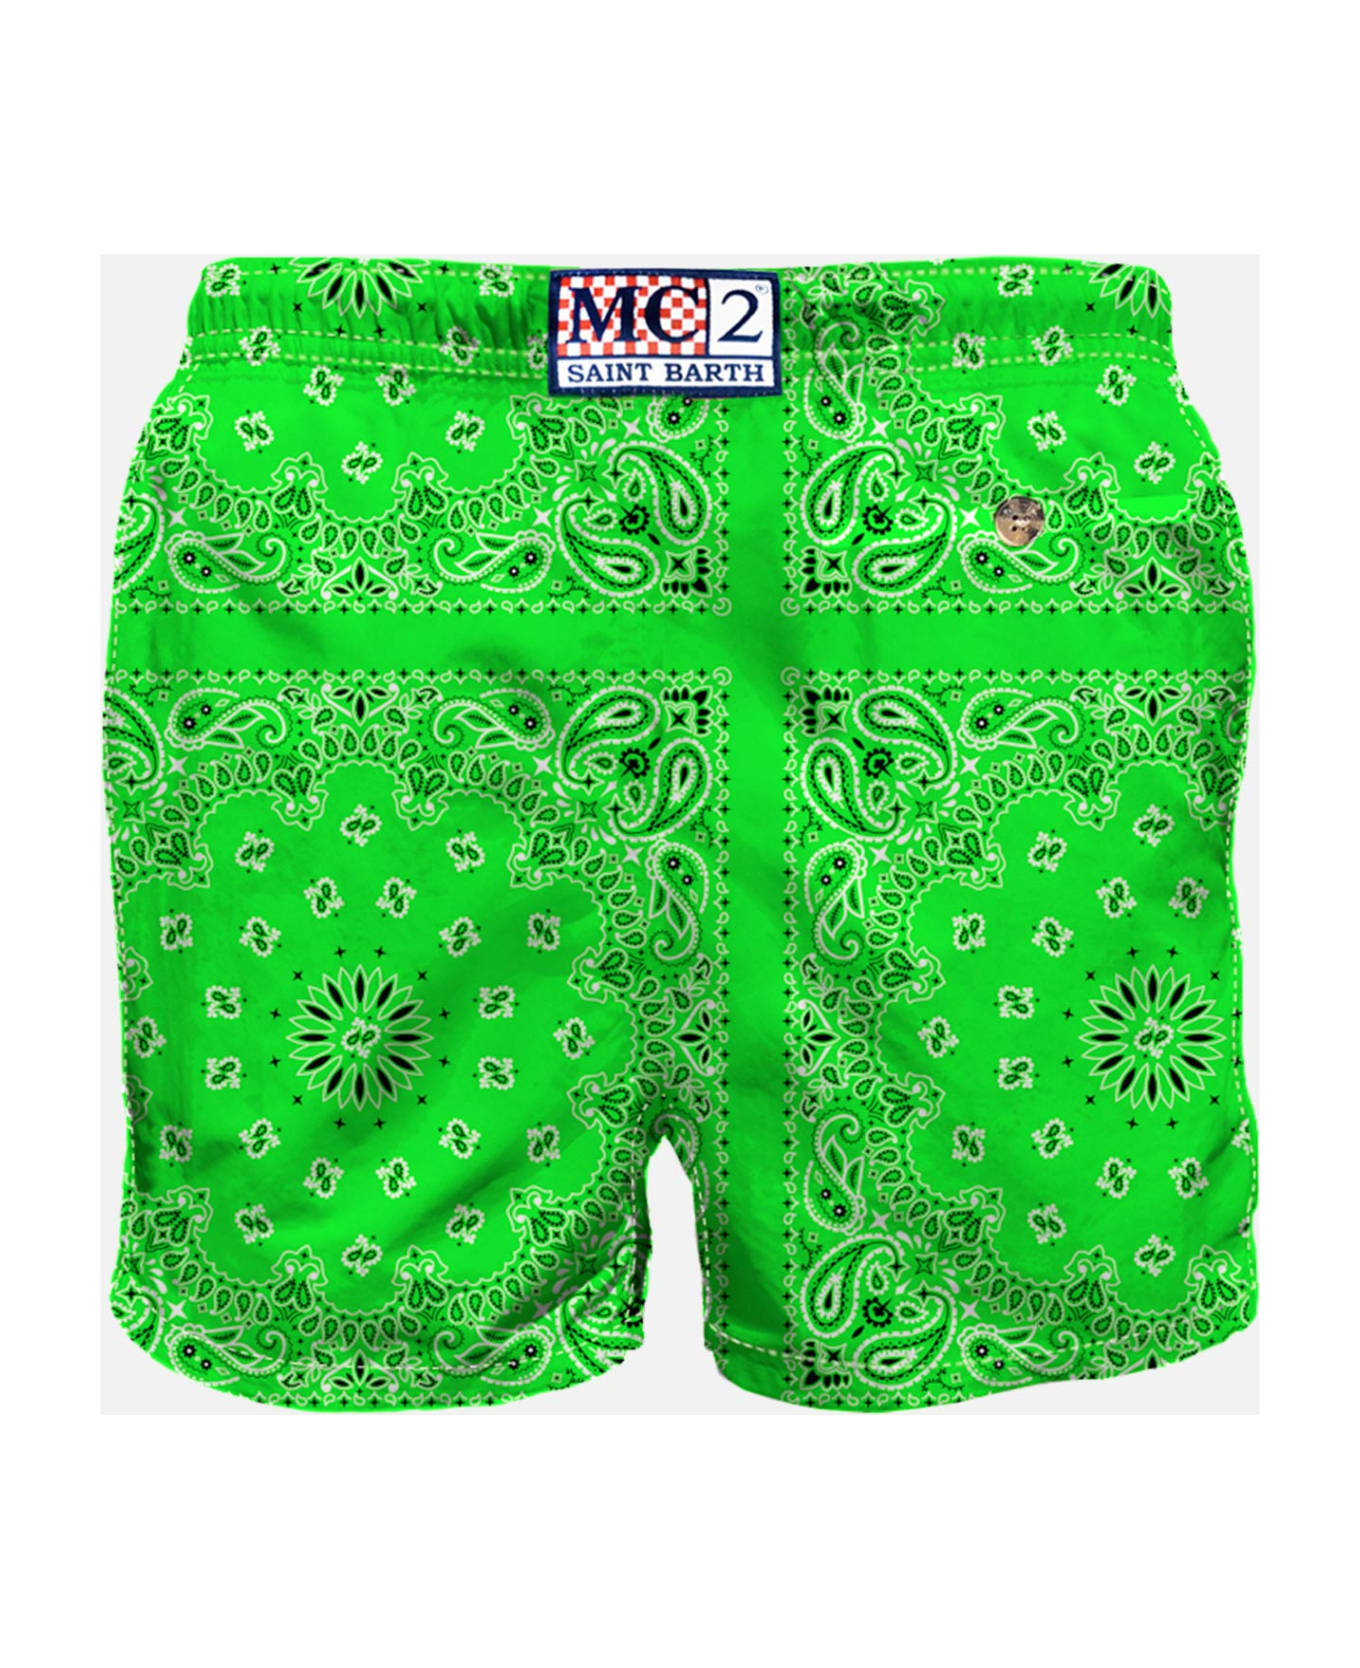 MC2 Saint Barth Man Swim Shorts With Green Bandanna Print - VERDE FLUO スイムトランクス